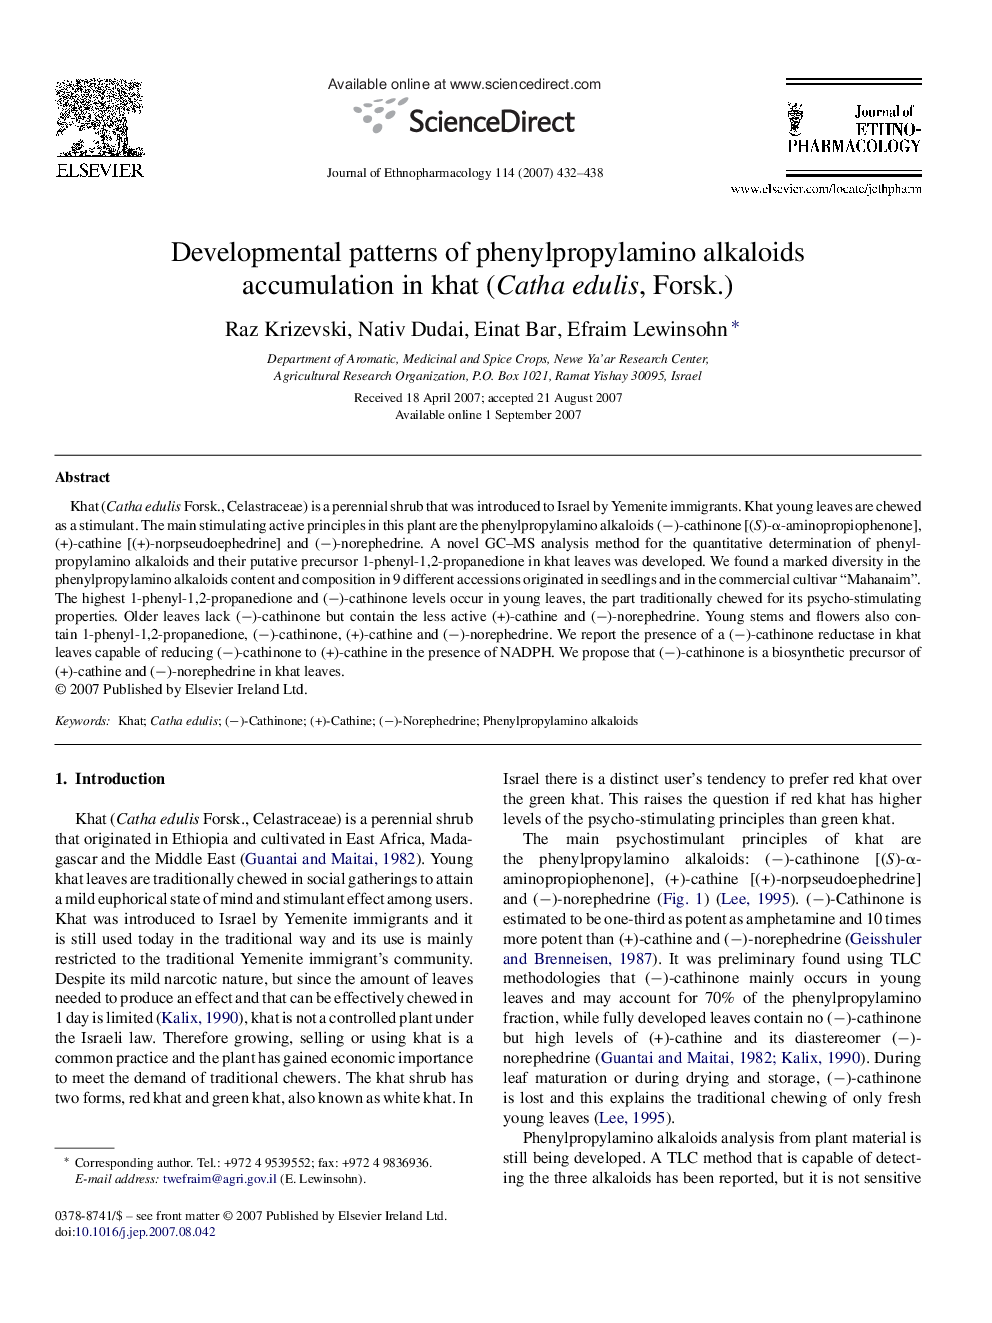 Developmental patterns of phenylpropylamino alkaloids accumulation in khat (Catha edulis, Forsk.)